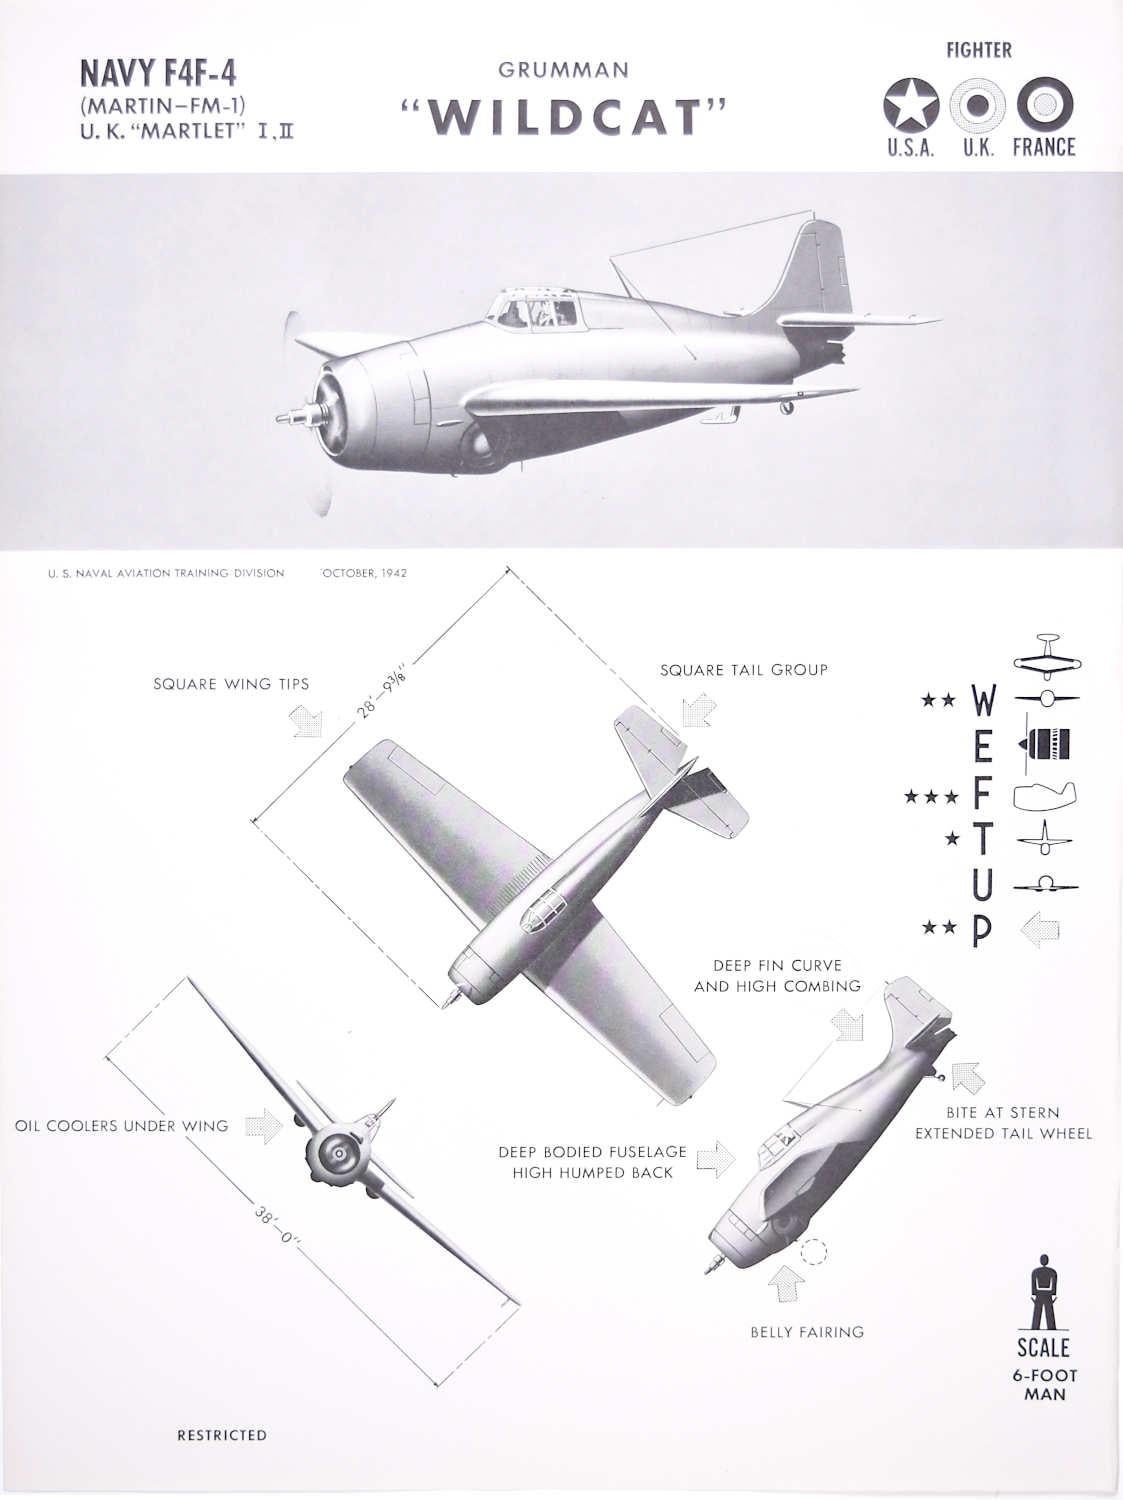 1942 Grumman "Wildcat" fighter aeroplane identification poster WW2 - Print by Unknown